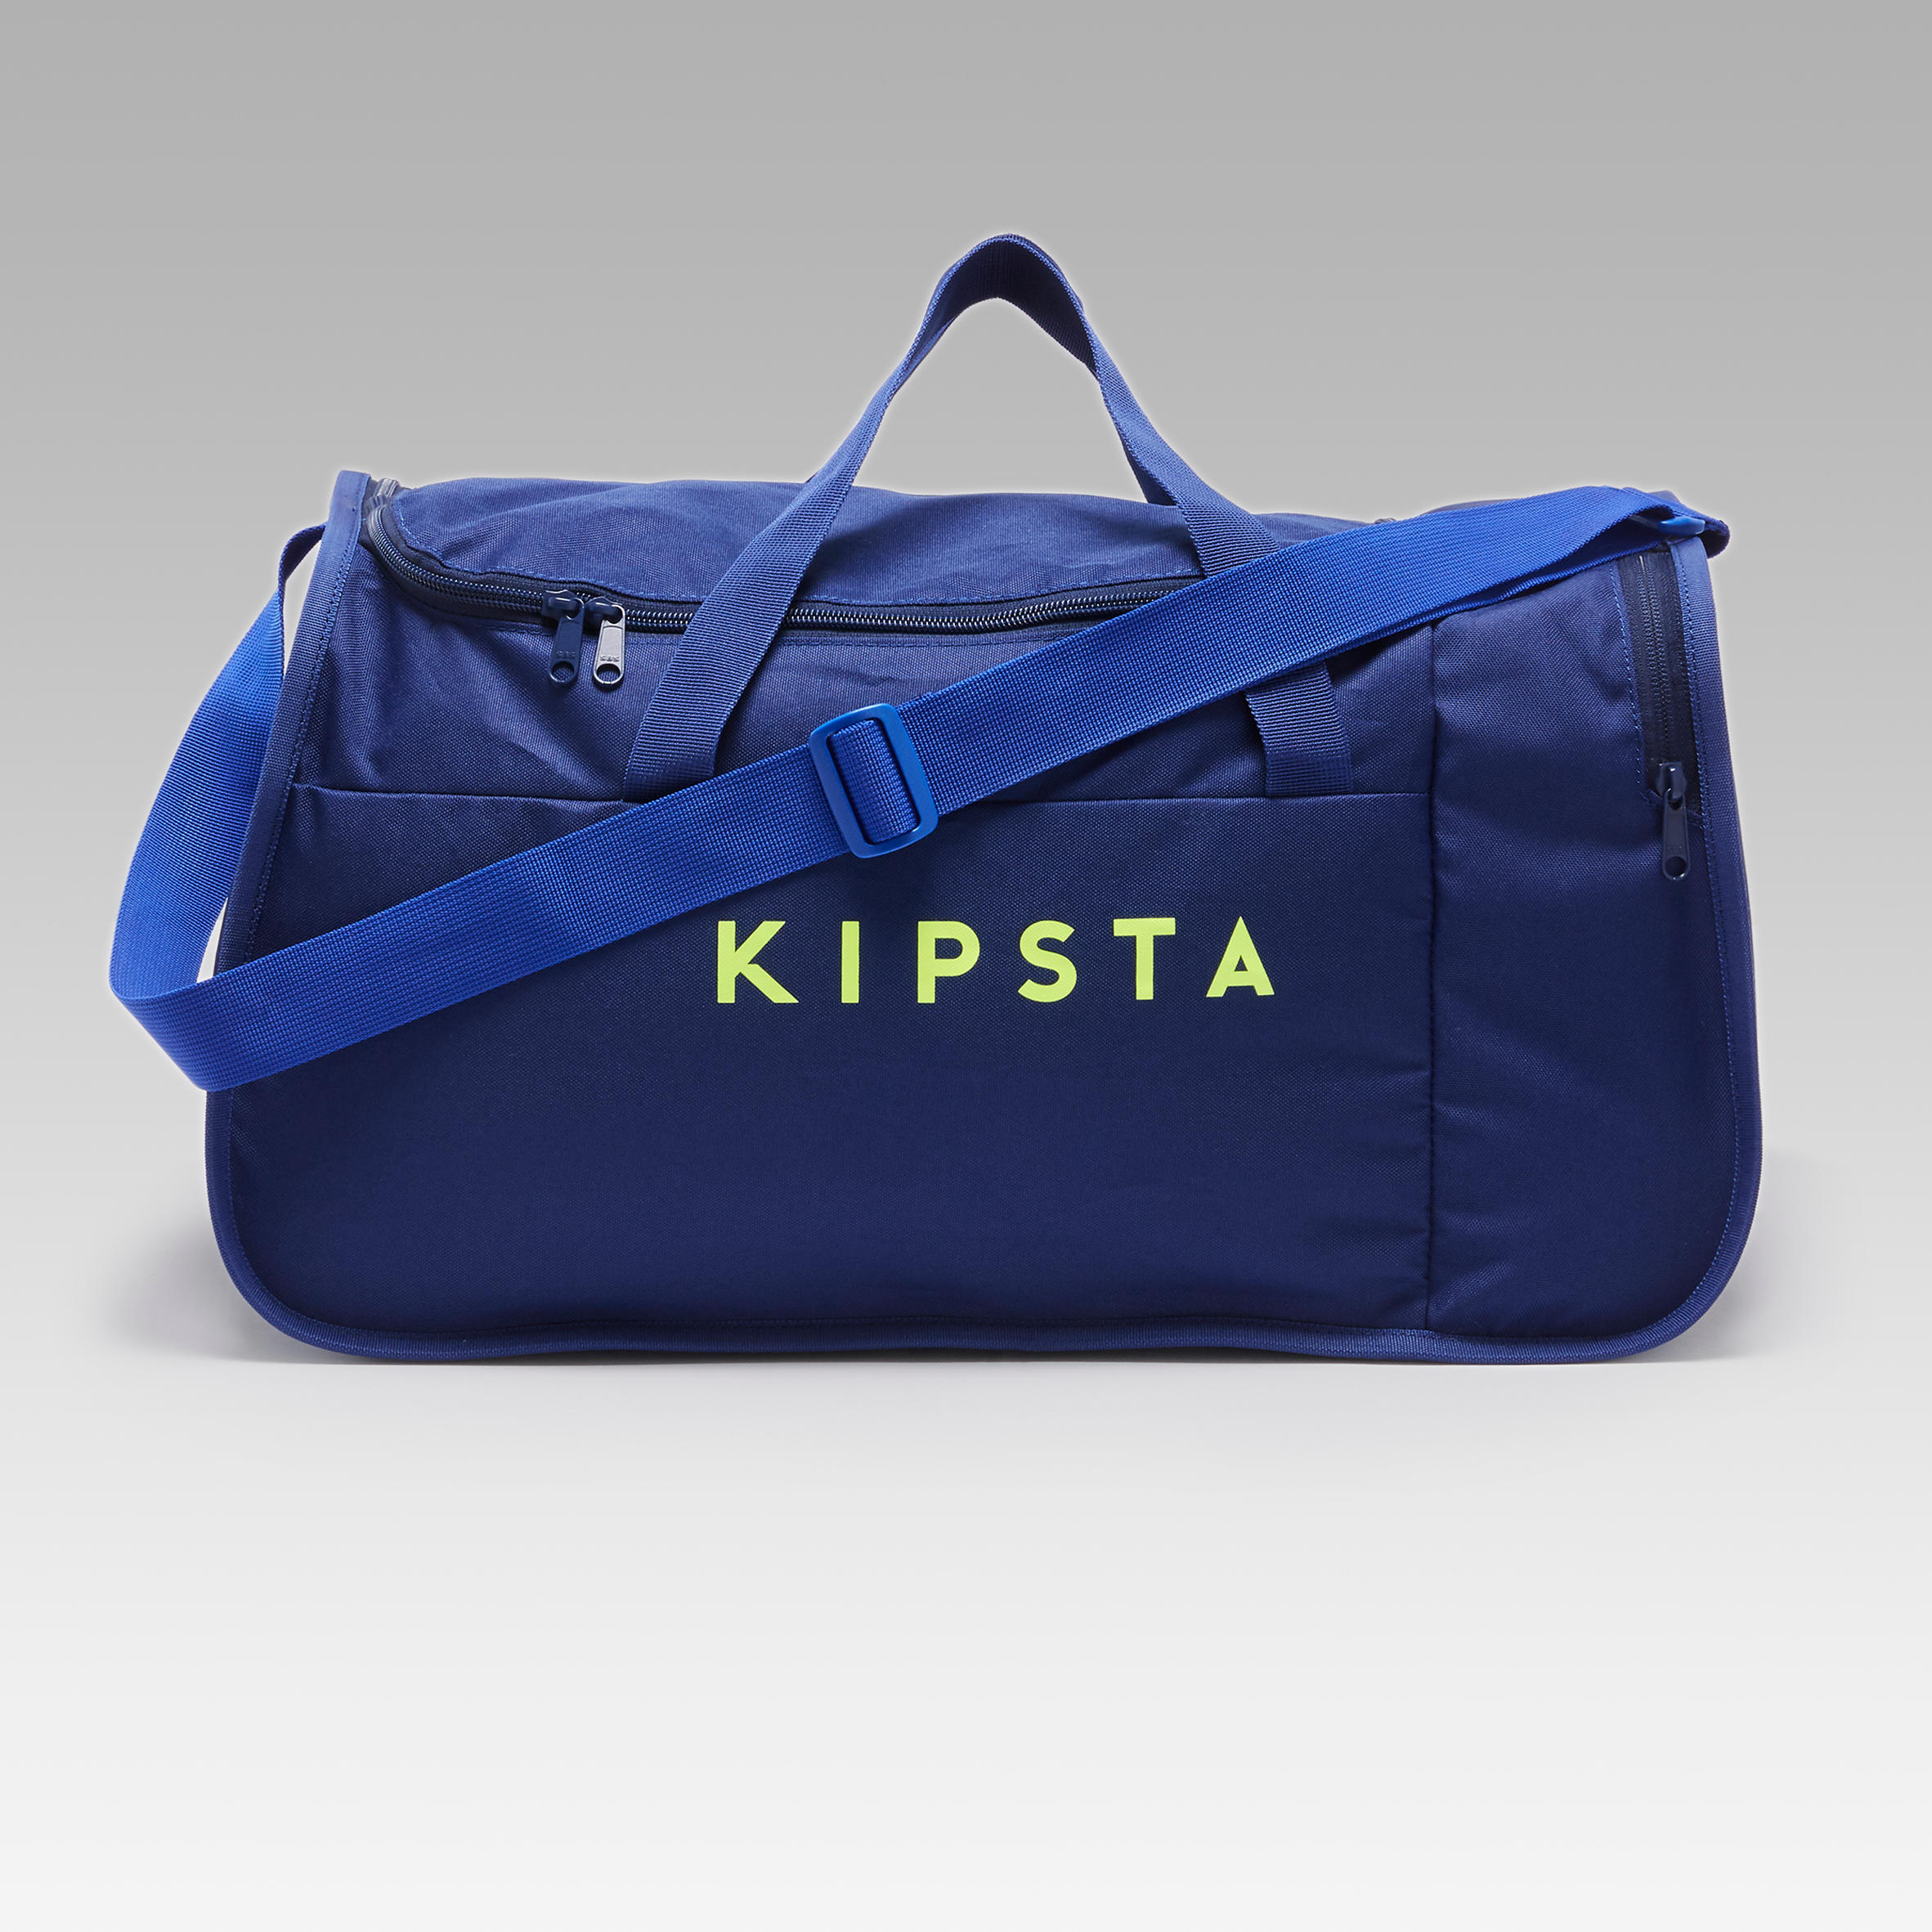 kipsta travel bag